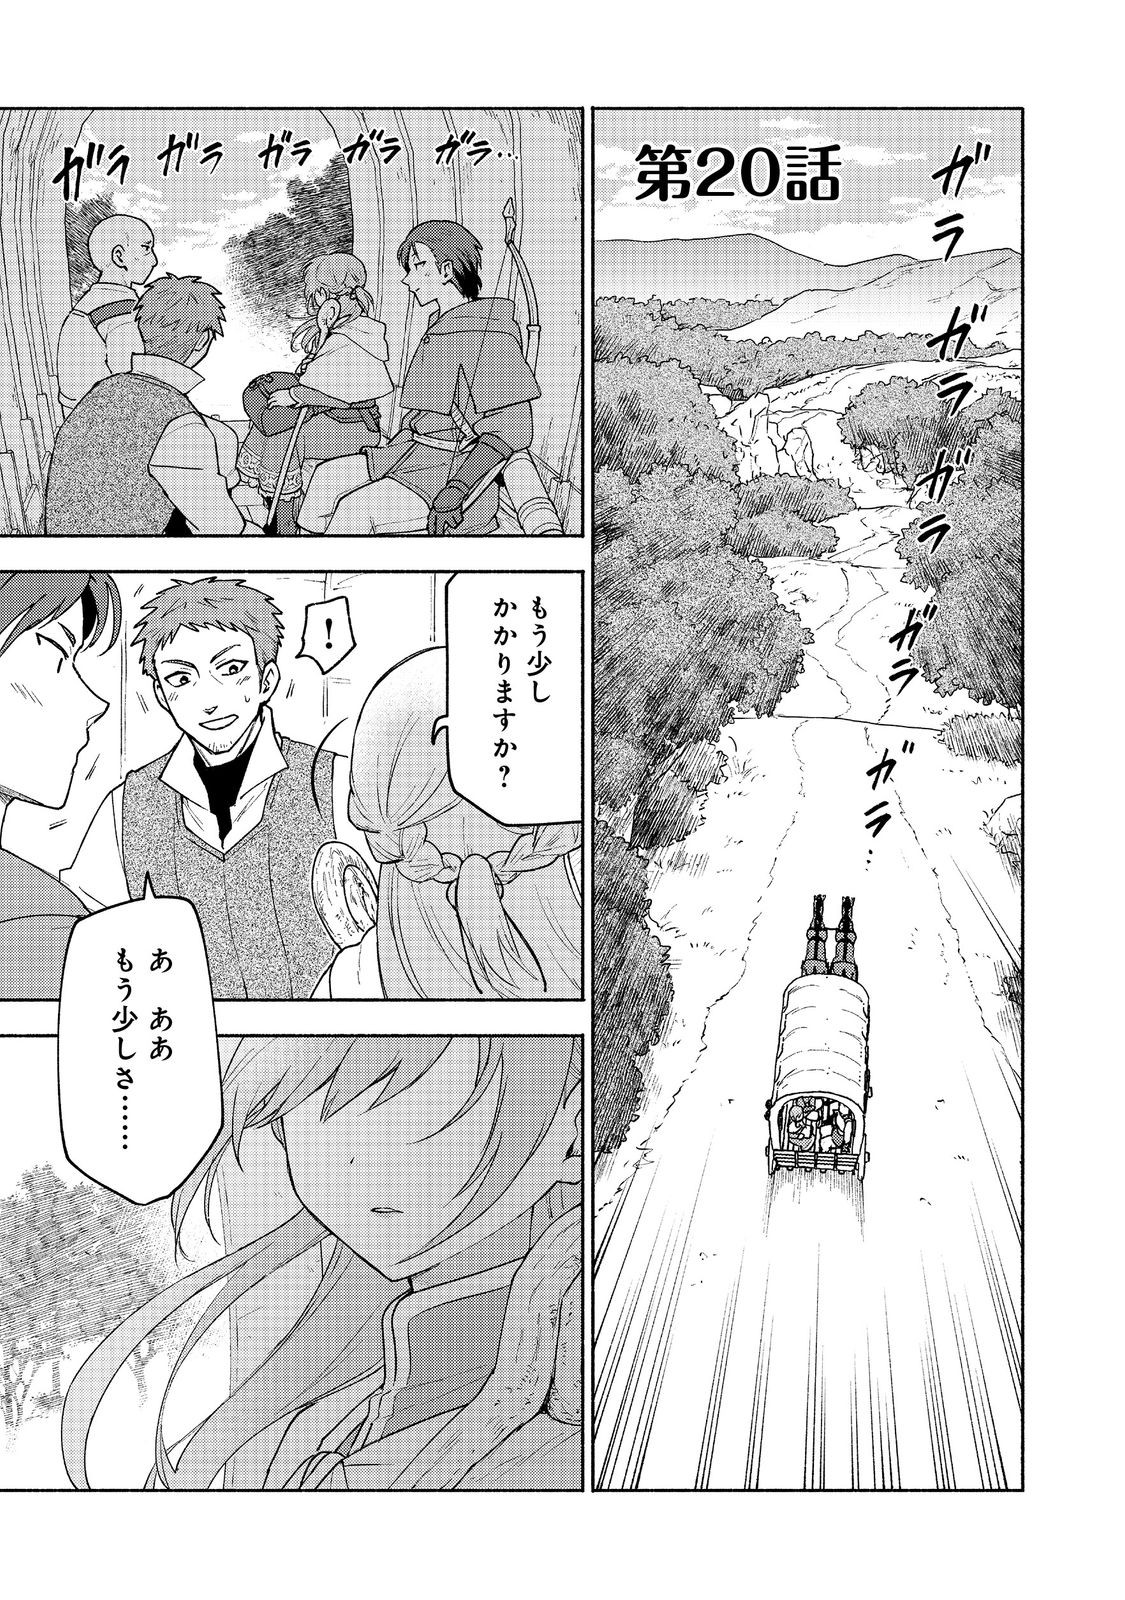 Otome Game no Heroine de Saikyou Survival - Chapter 20 - Page 1